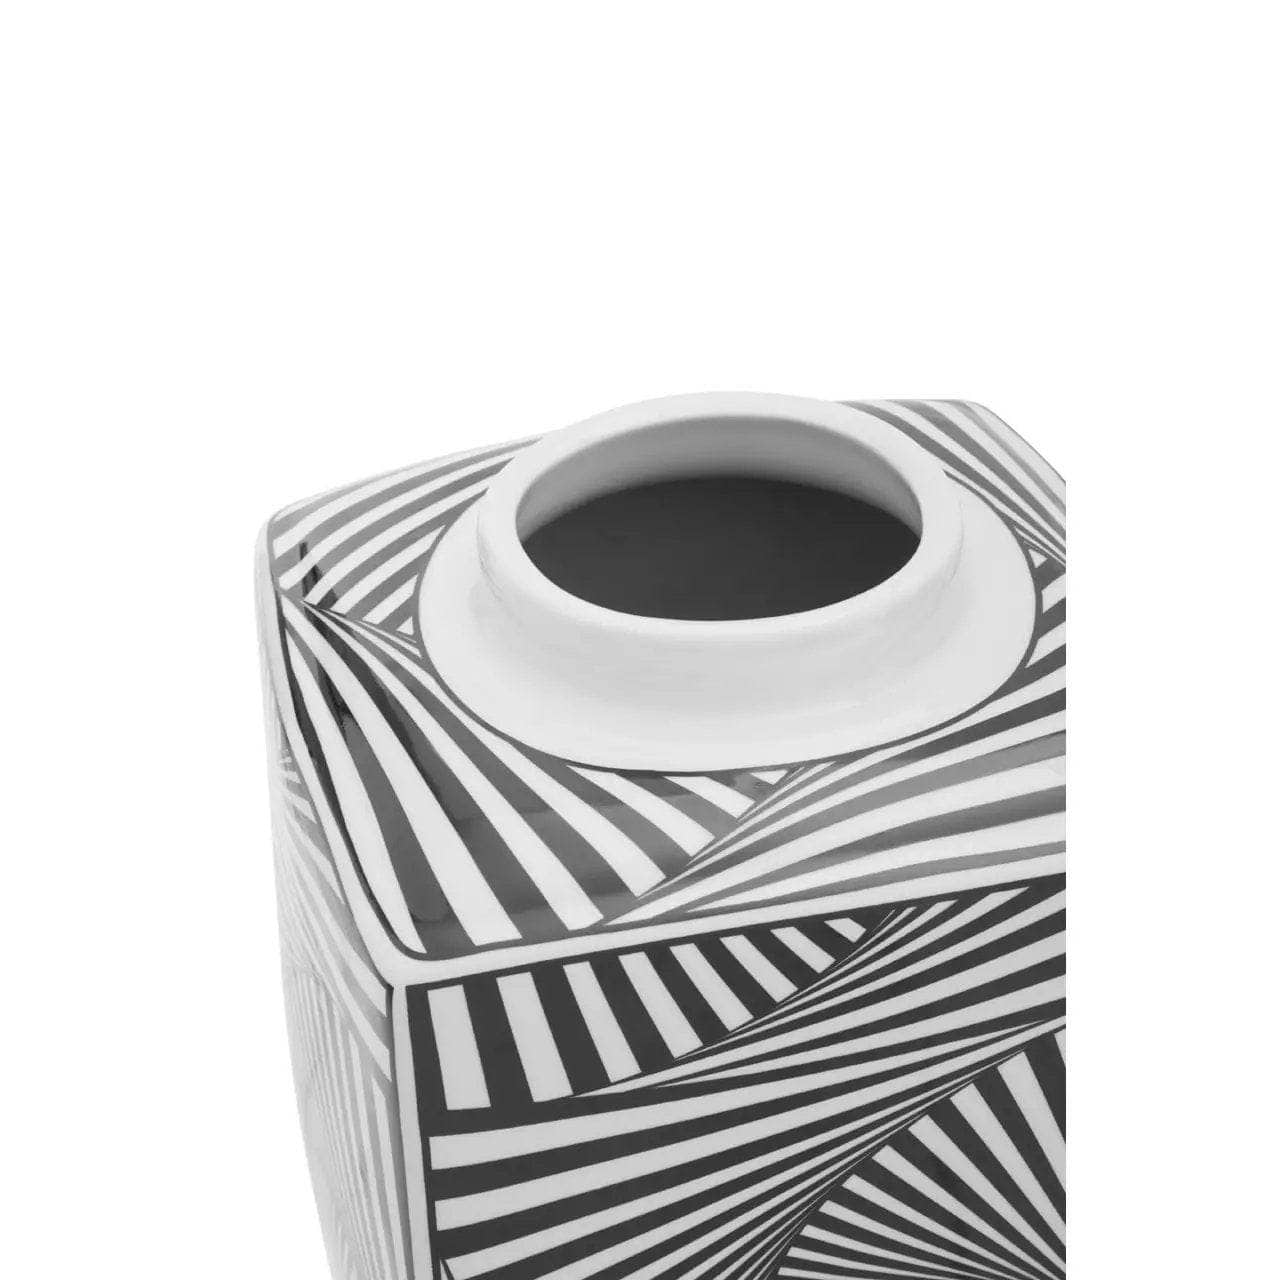  -  Doria Geometric Print Ceramic Jar - Large  -  60003205